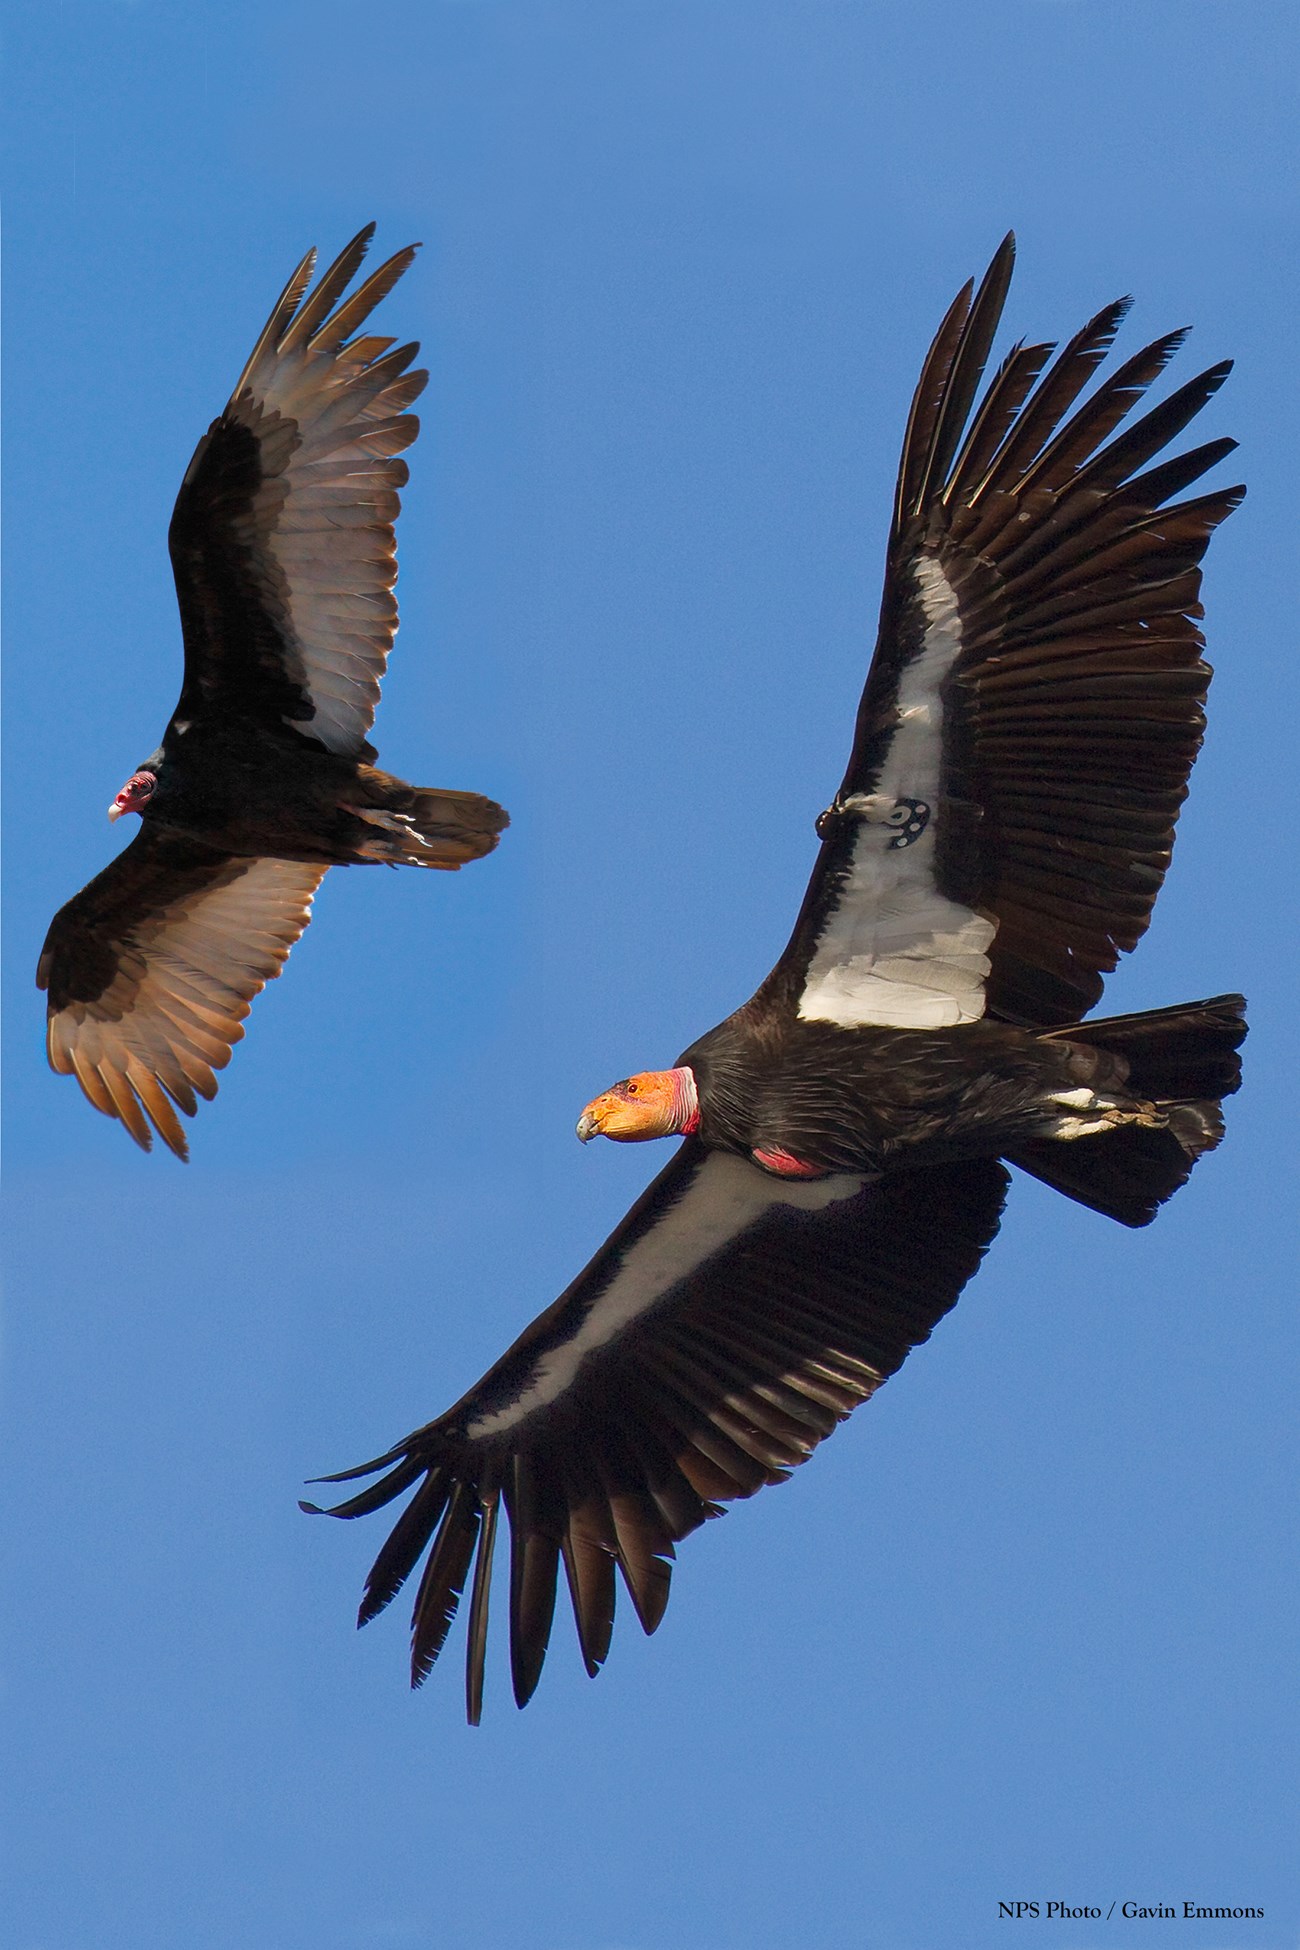 Large dark condor with orange head soars below a smaller turkey vulture.